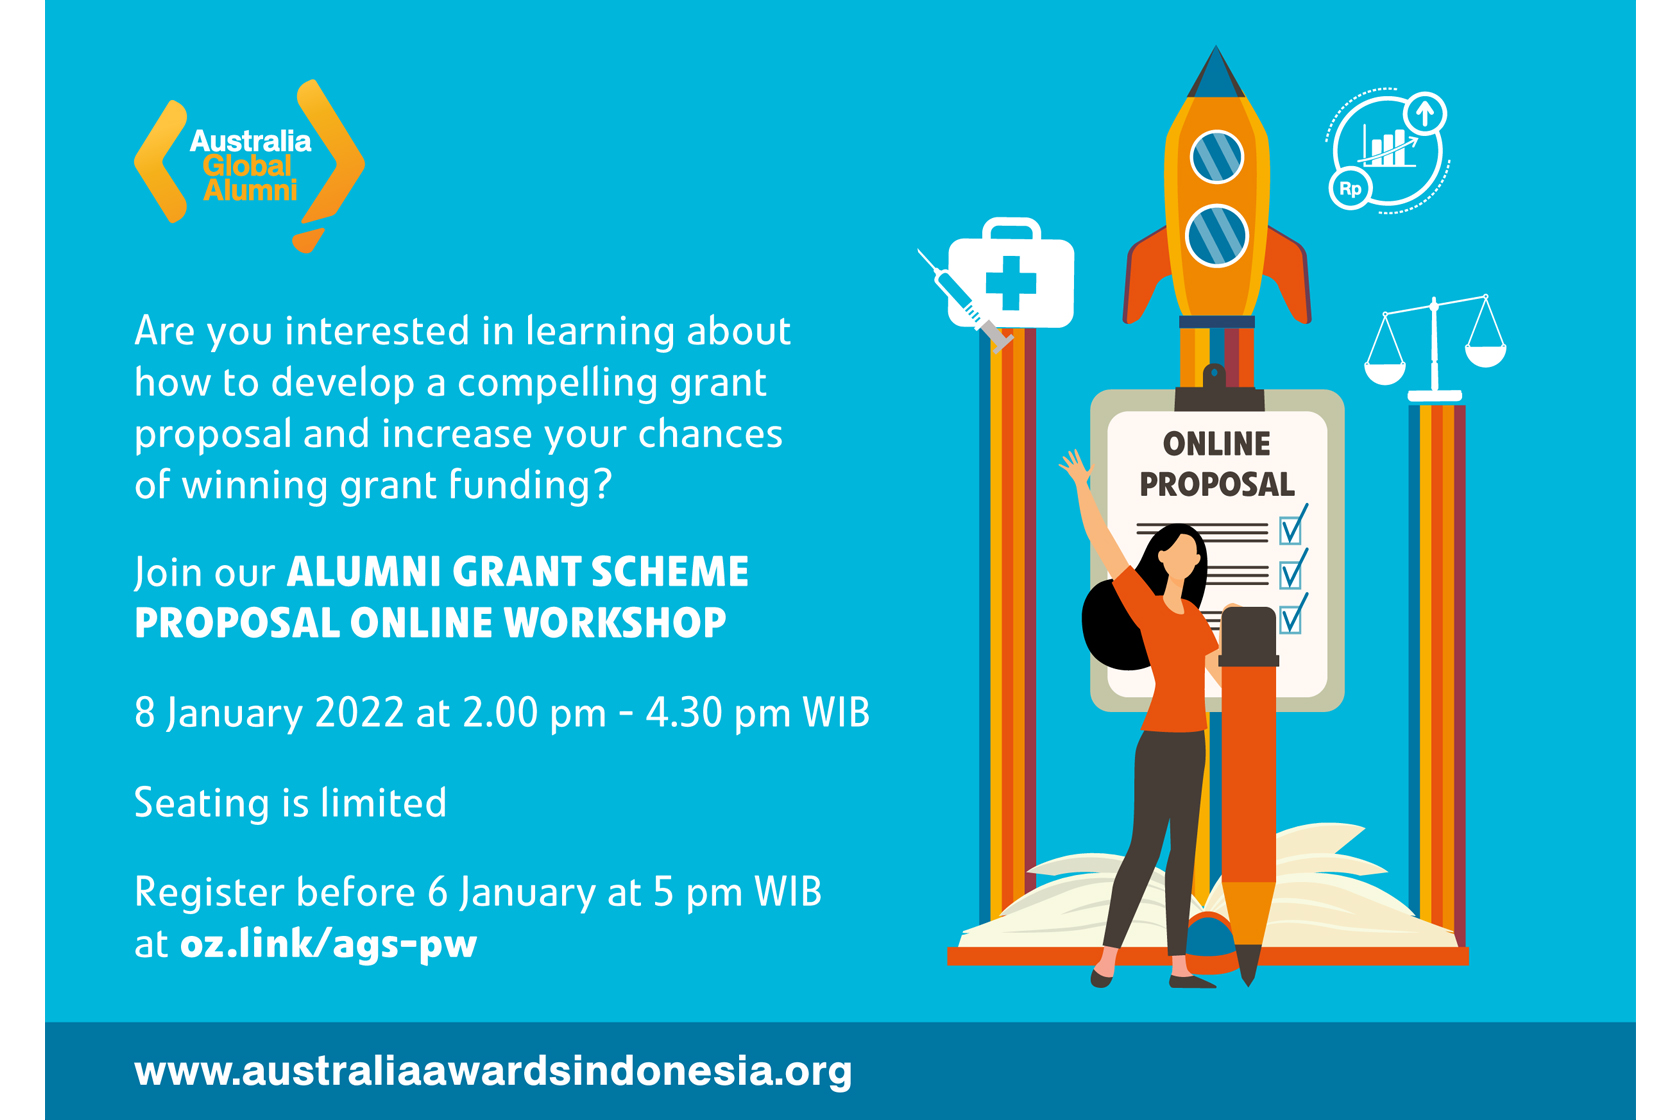 Join Our Alumni Grant Scheme (AGS) Proposal Online Workshop